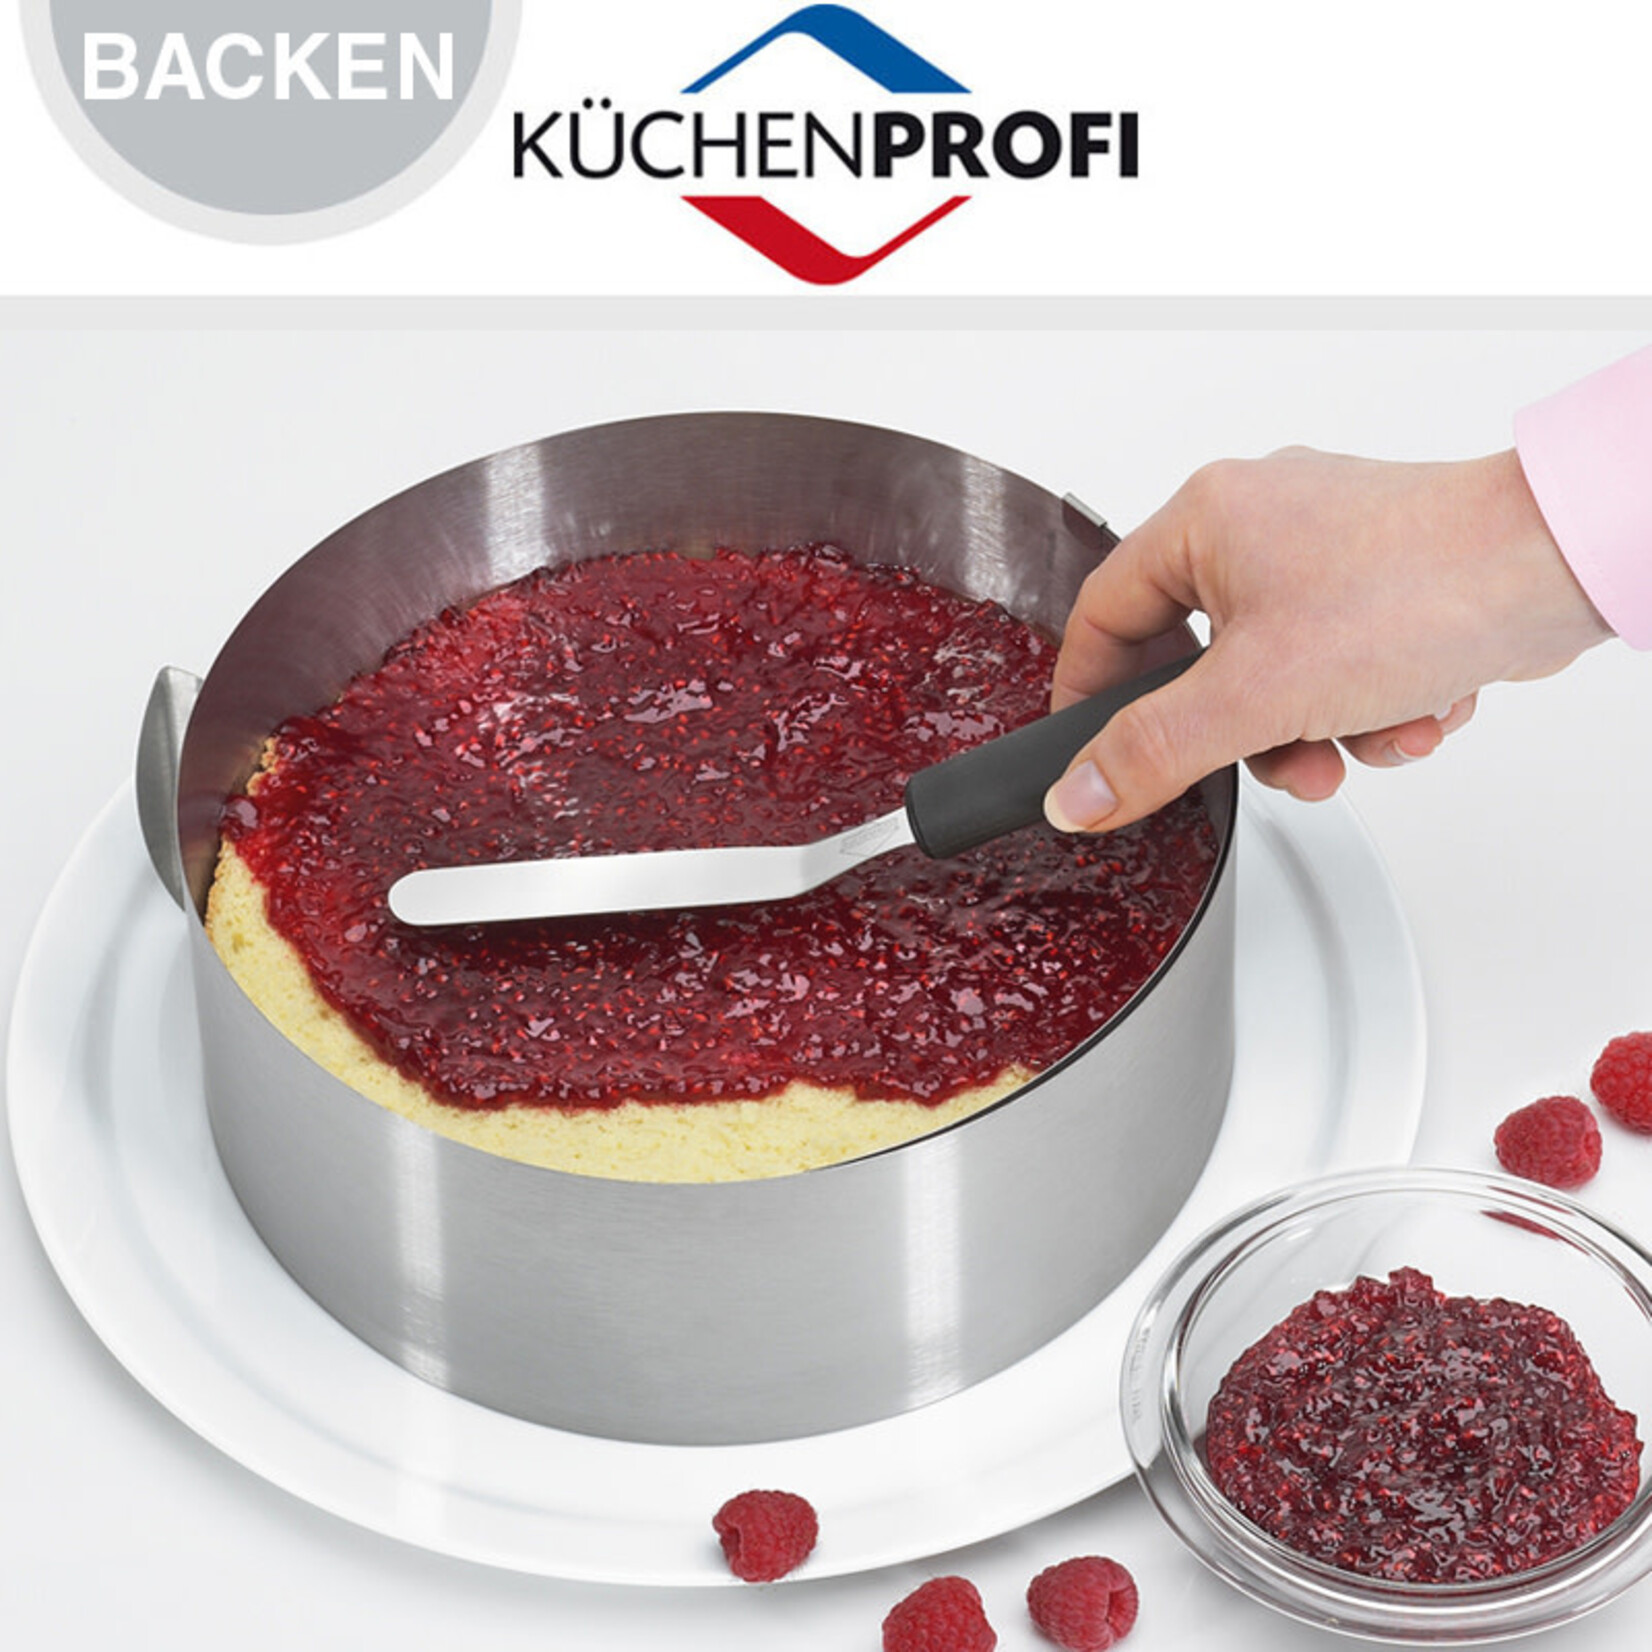 Kuchenprofi hobby bakker messen & spatels set Kuchenprofi patissier messenset Kuchenprofi 0805852803